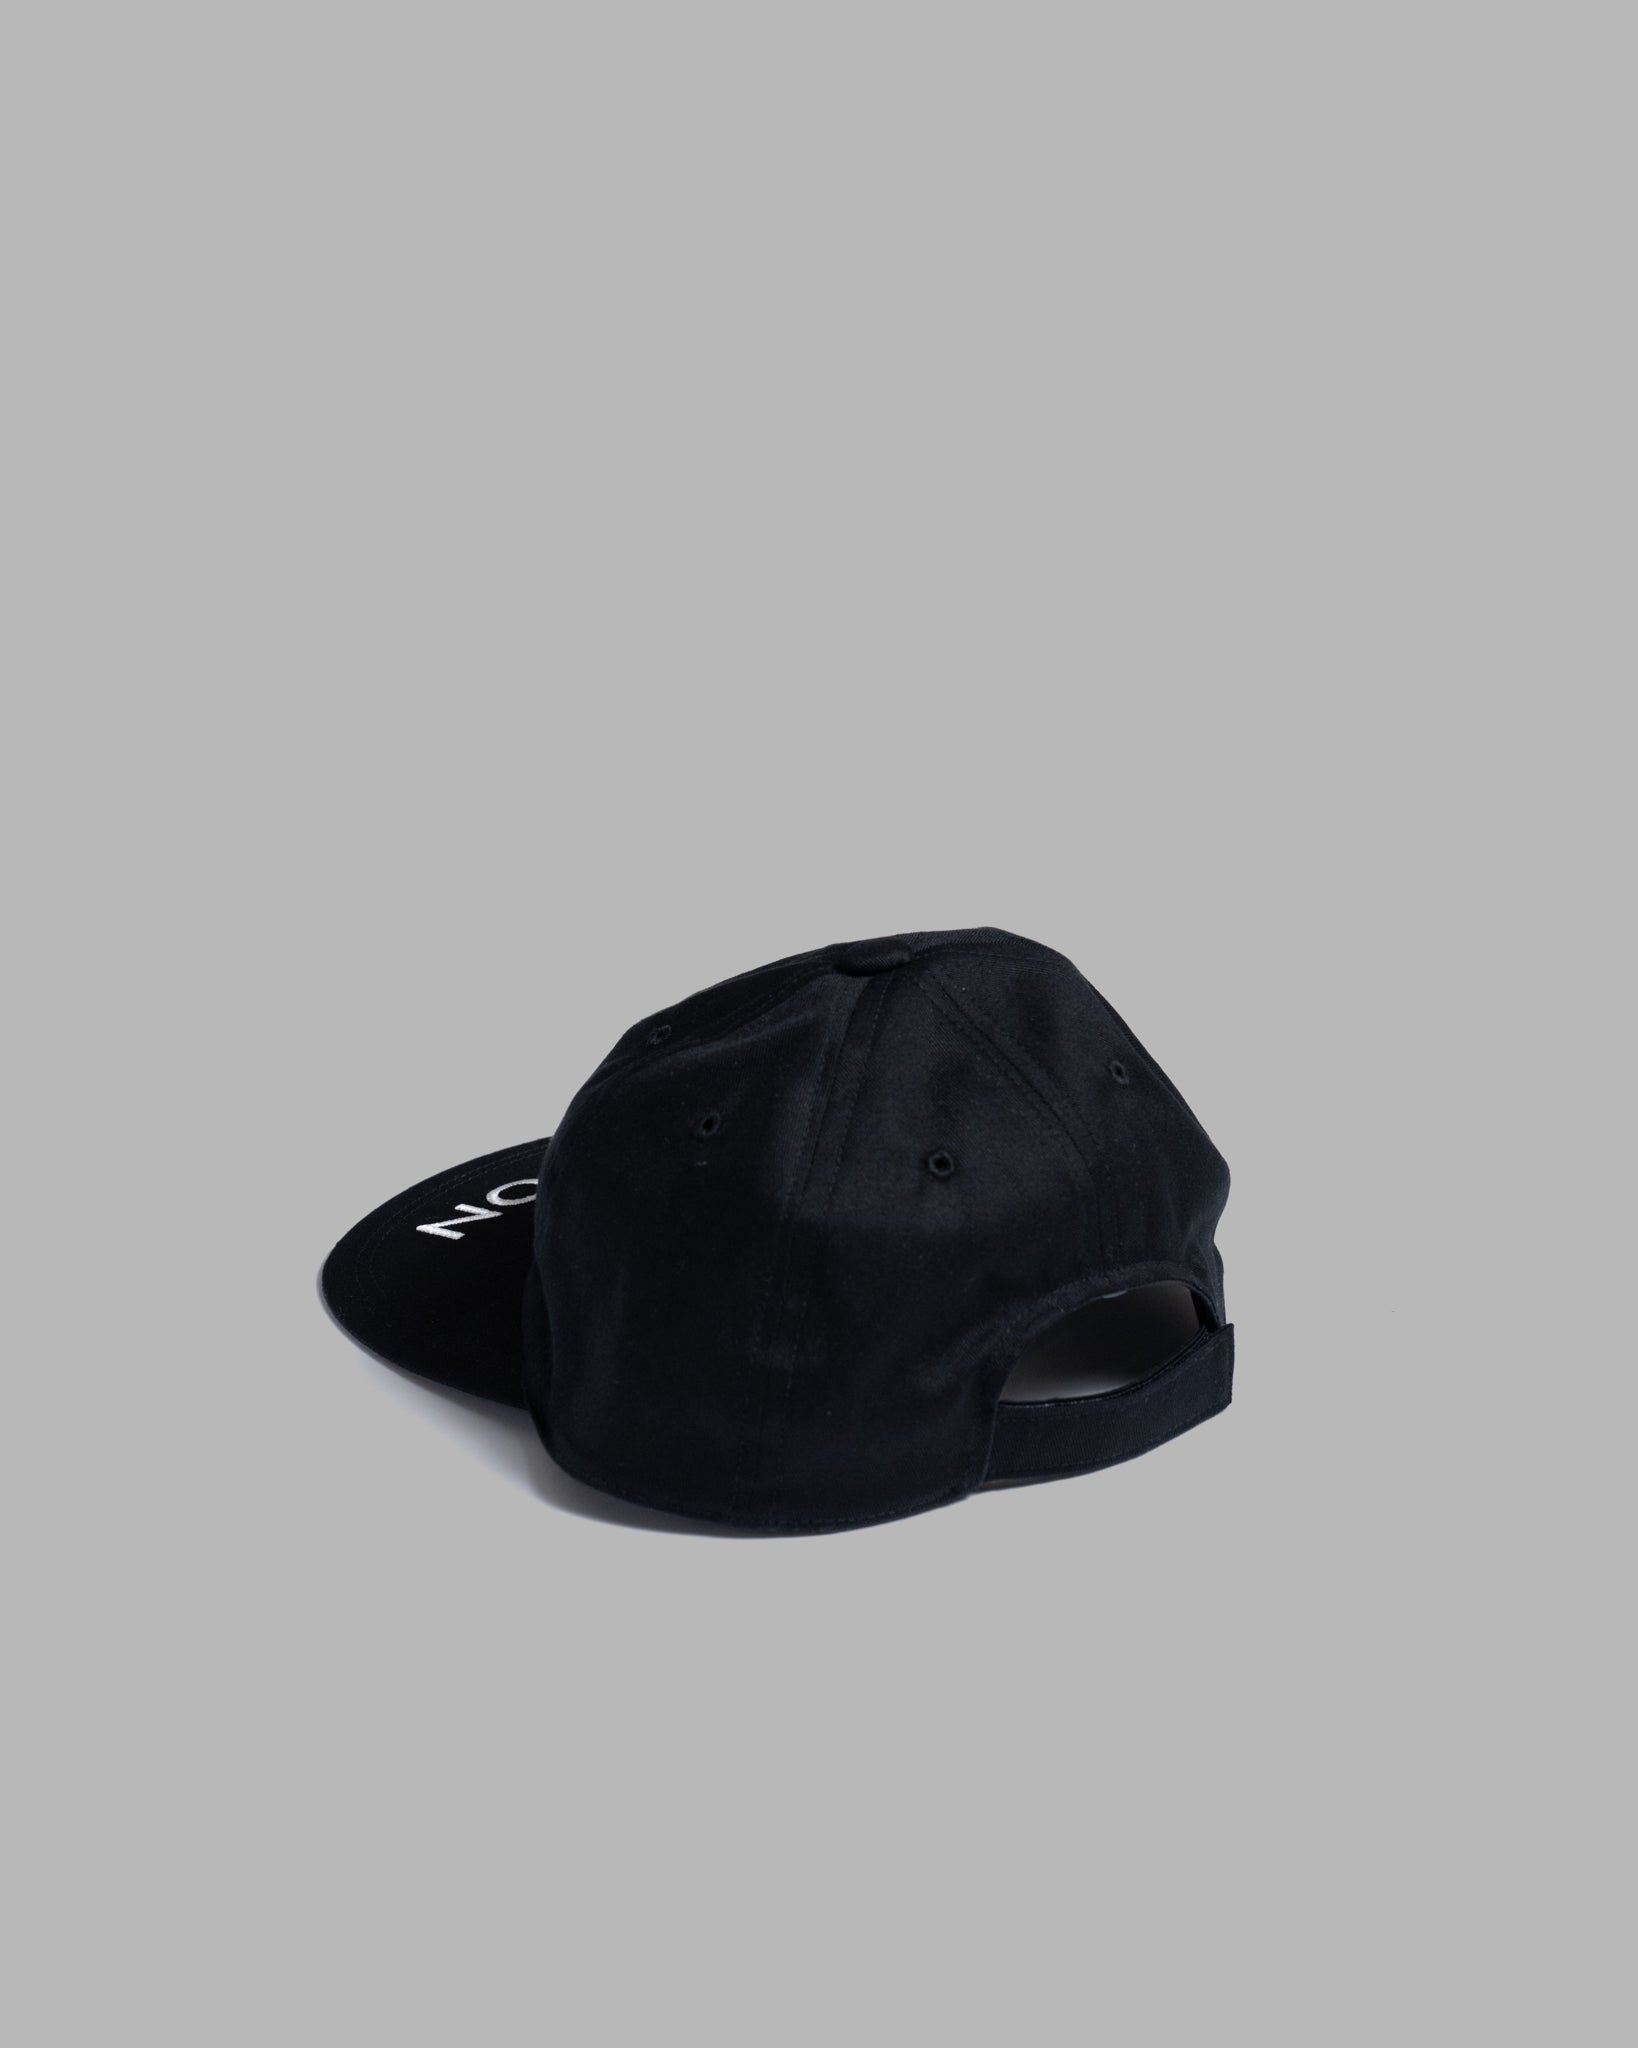 6 PANEL LOGO CAP - BLACK